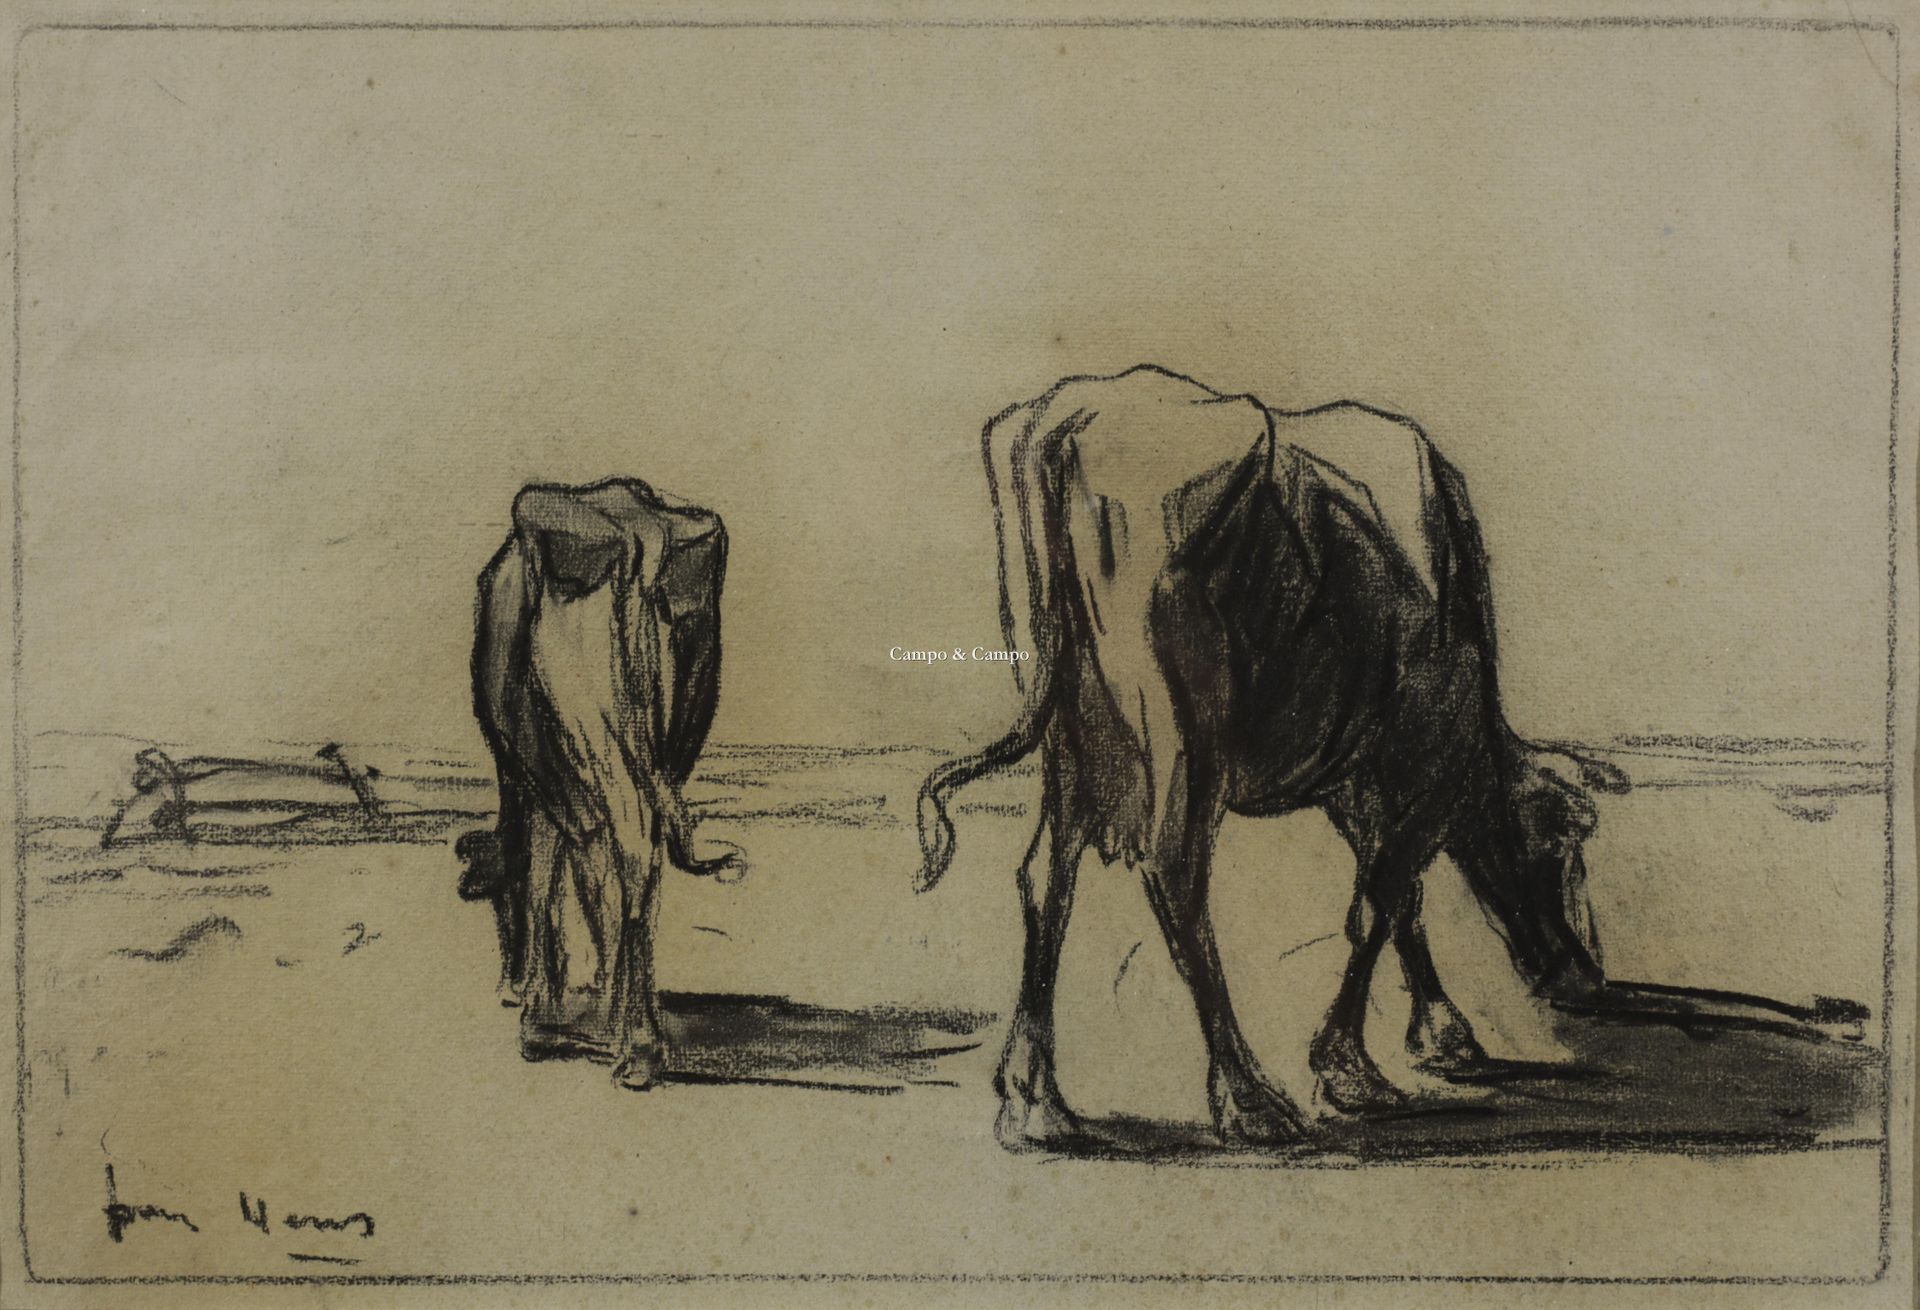 HENS FRANS 1856-1928 Estudio de las vacas en los pastos
Studie van grazende koei&hellip;